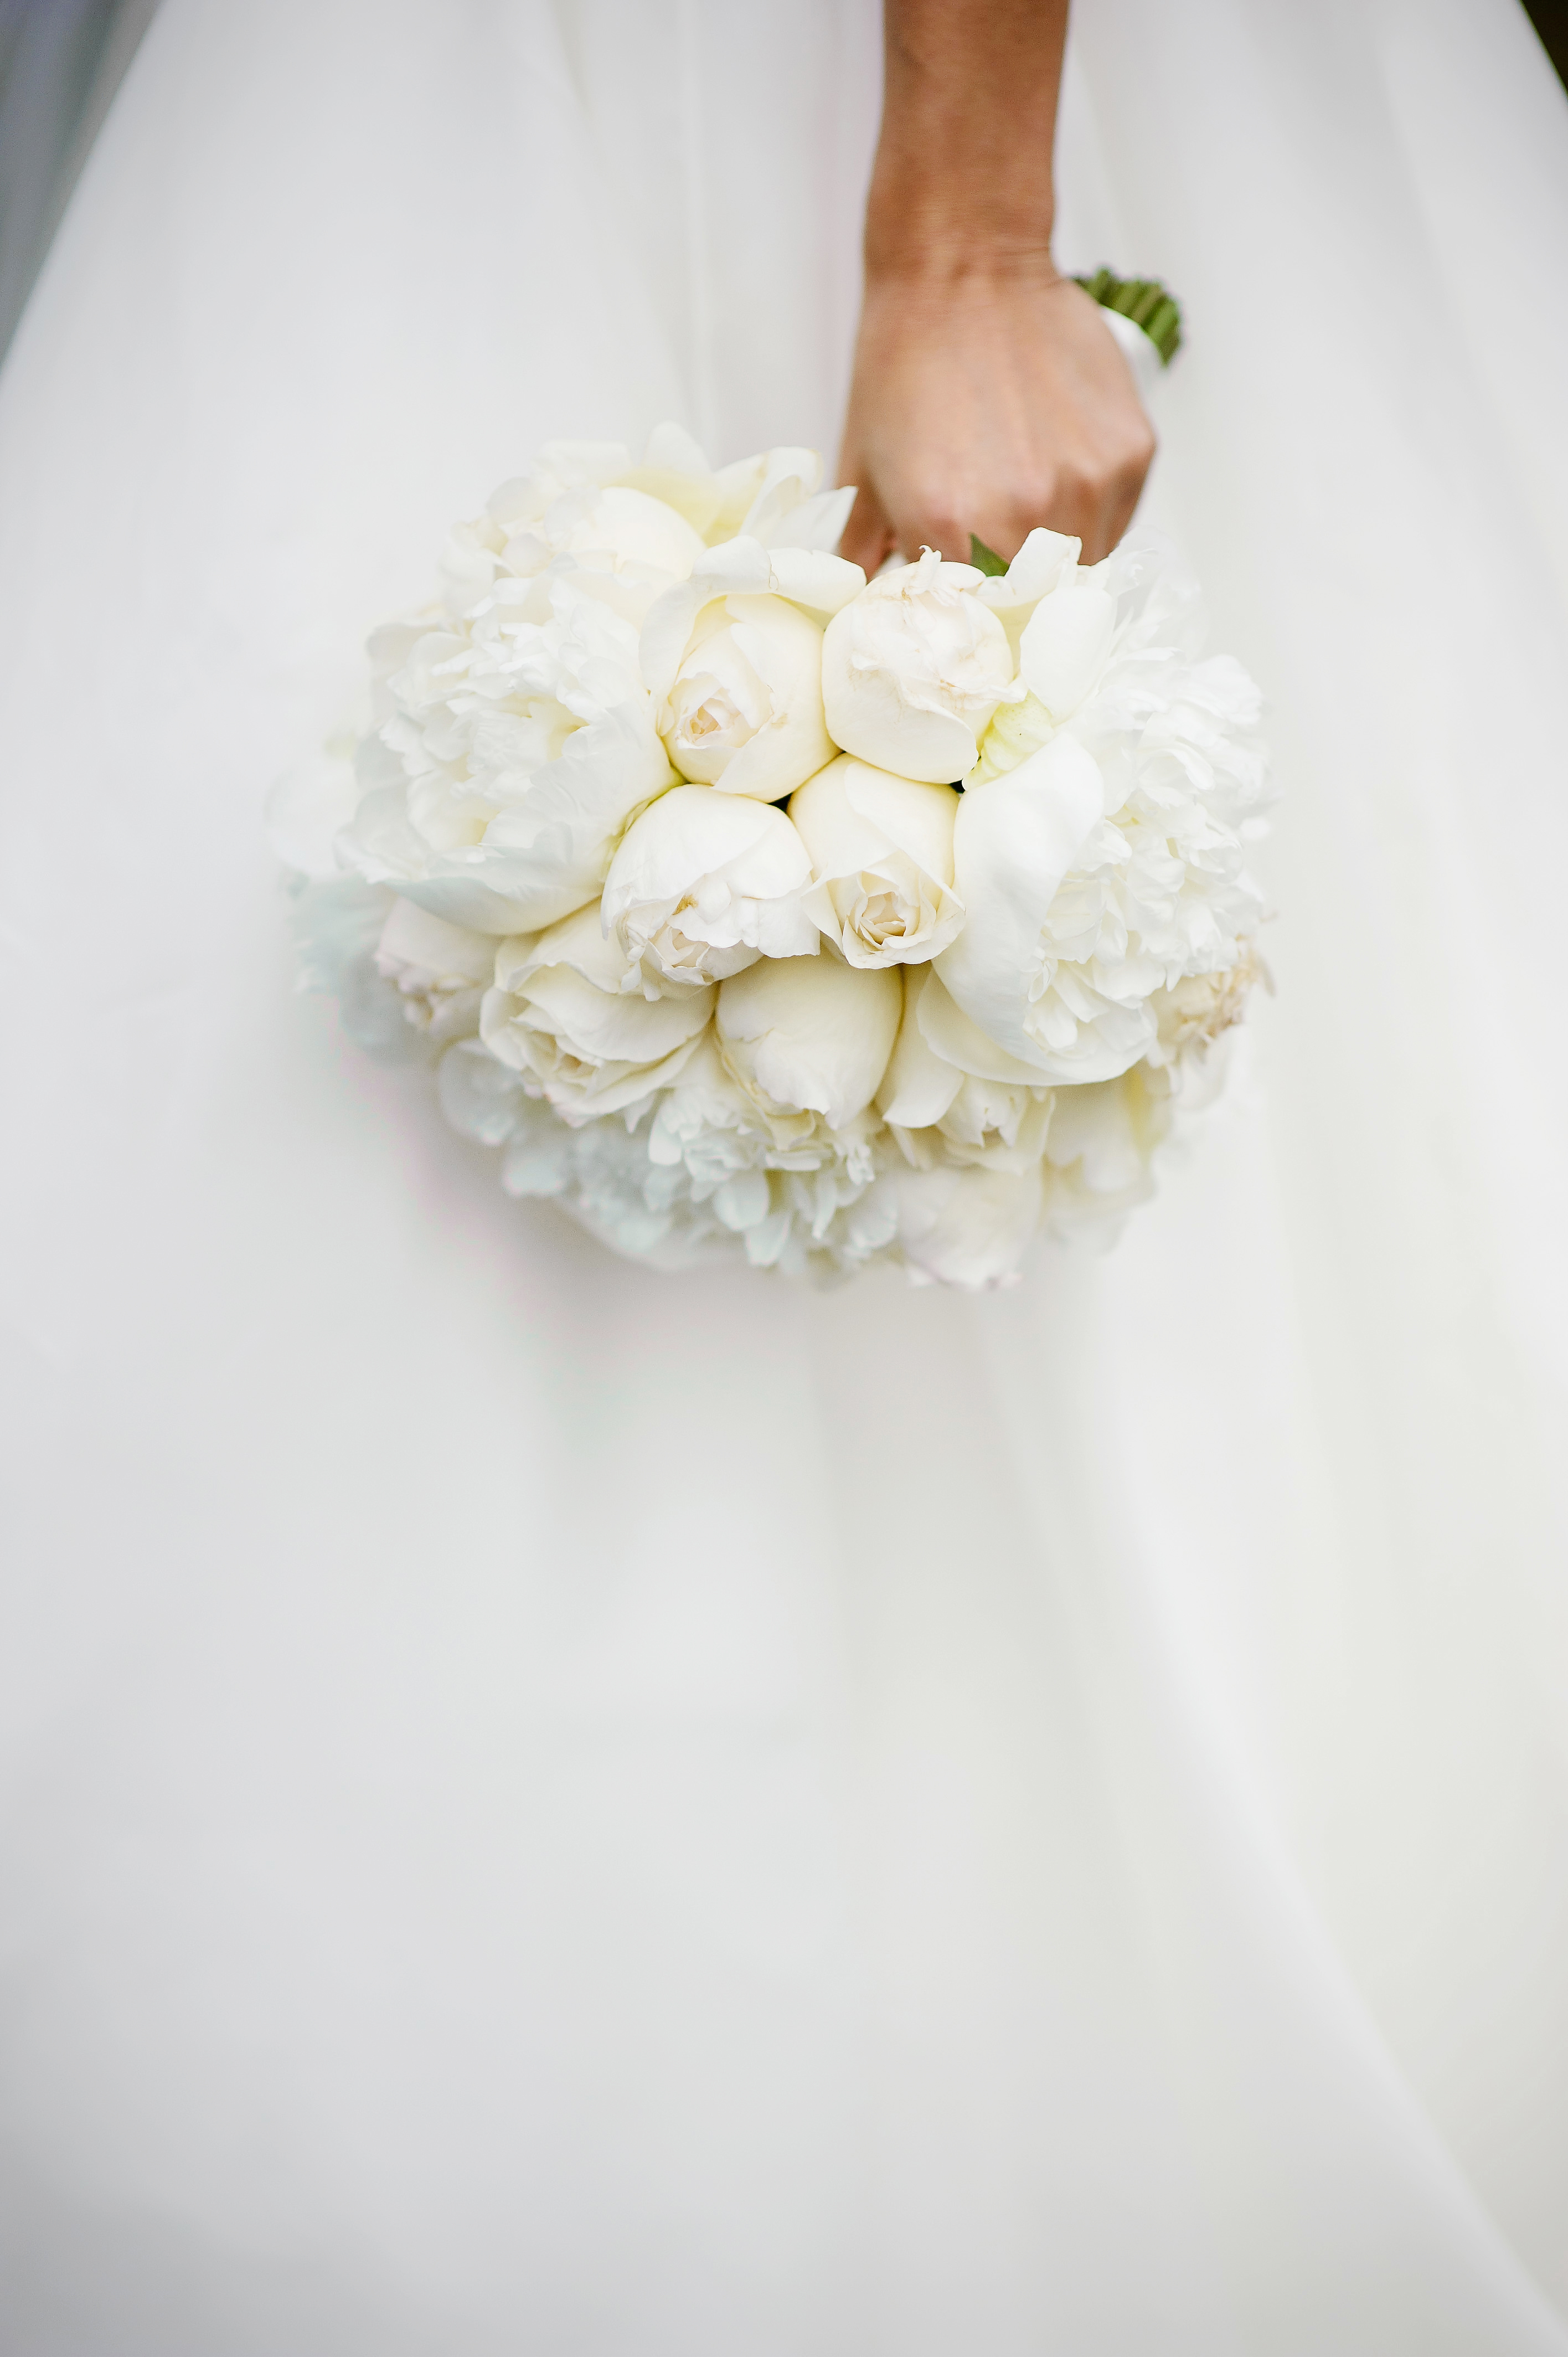 Classic white wedding flowers